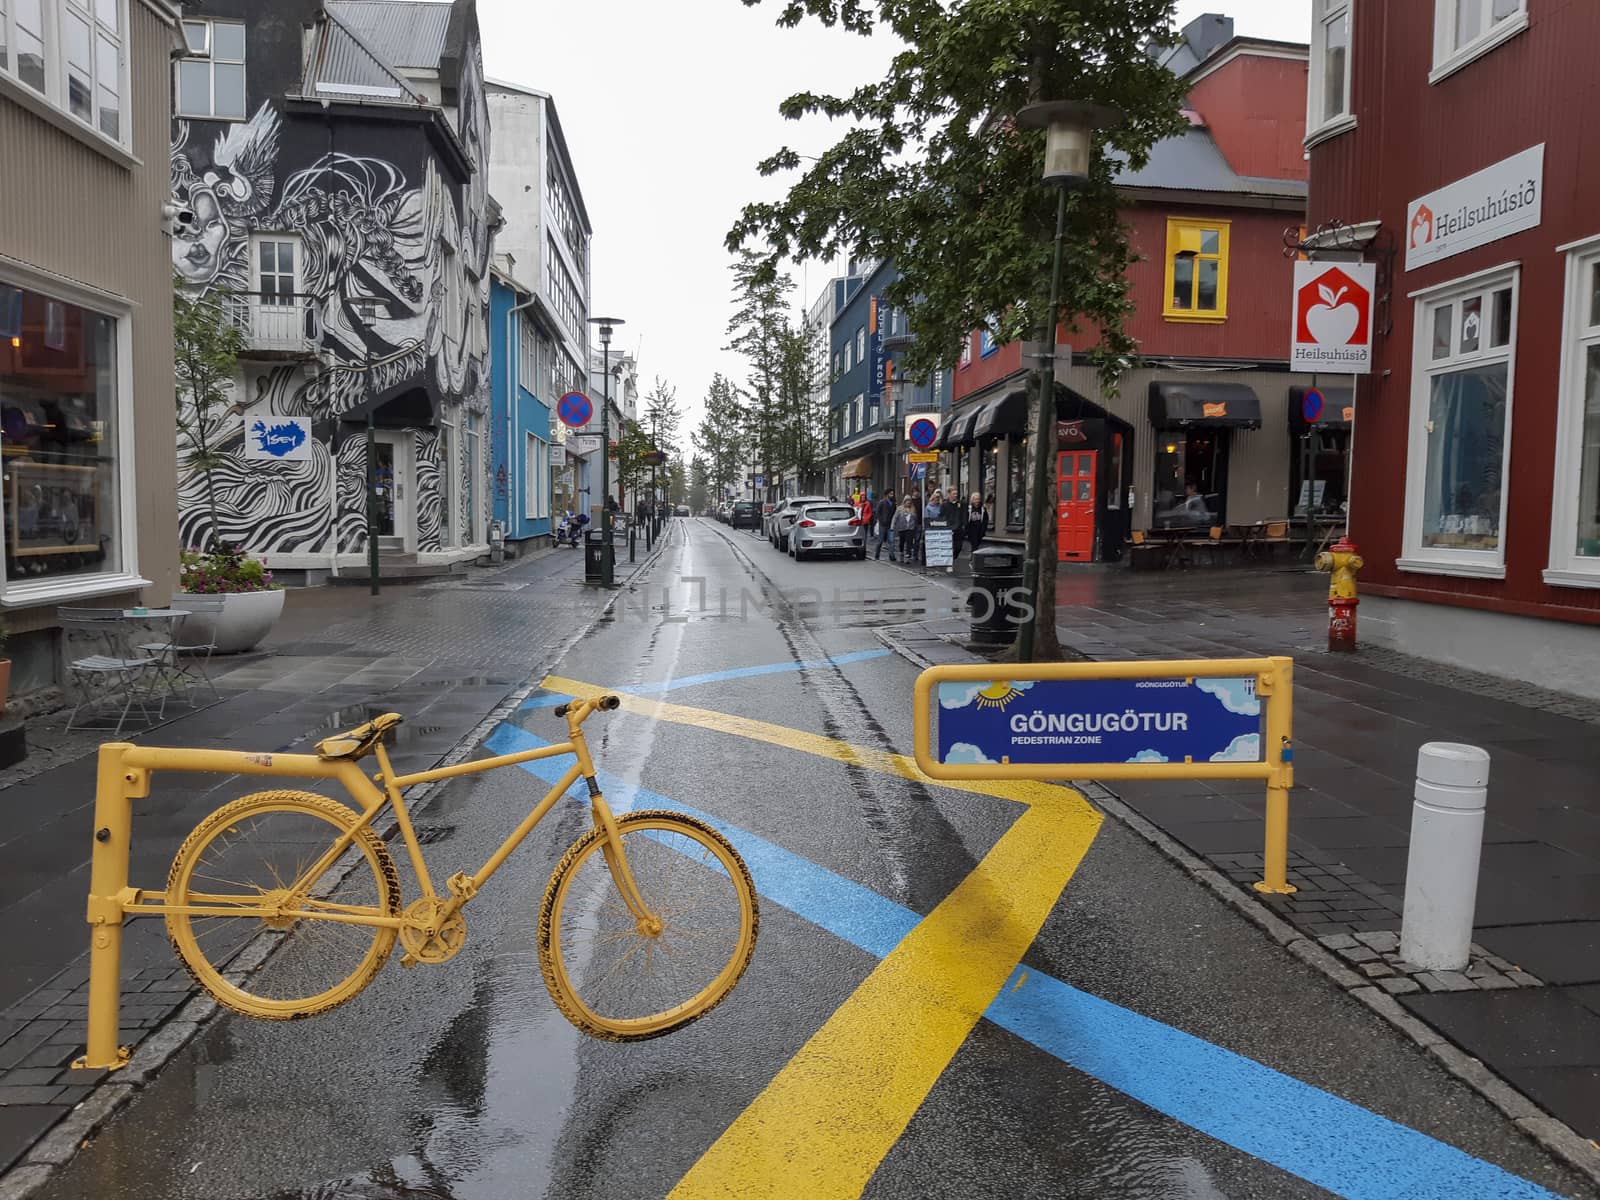 Reykjavik, Iceland, July 2019: pedestrian zone in Reykjavik, Iceland, on a rainy day